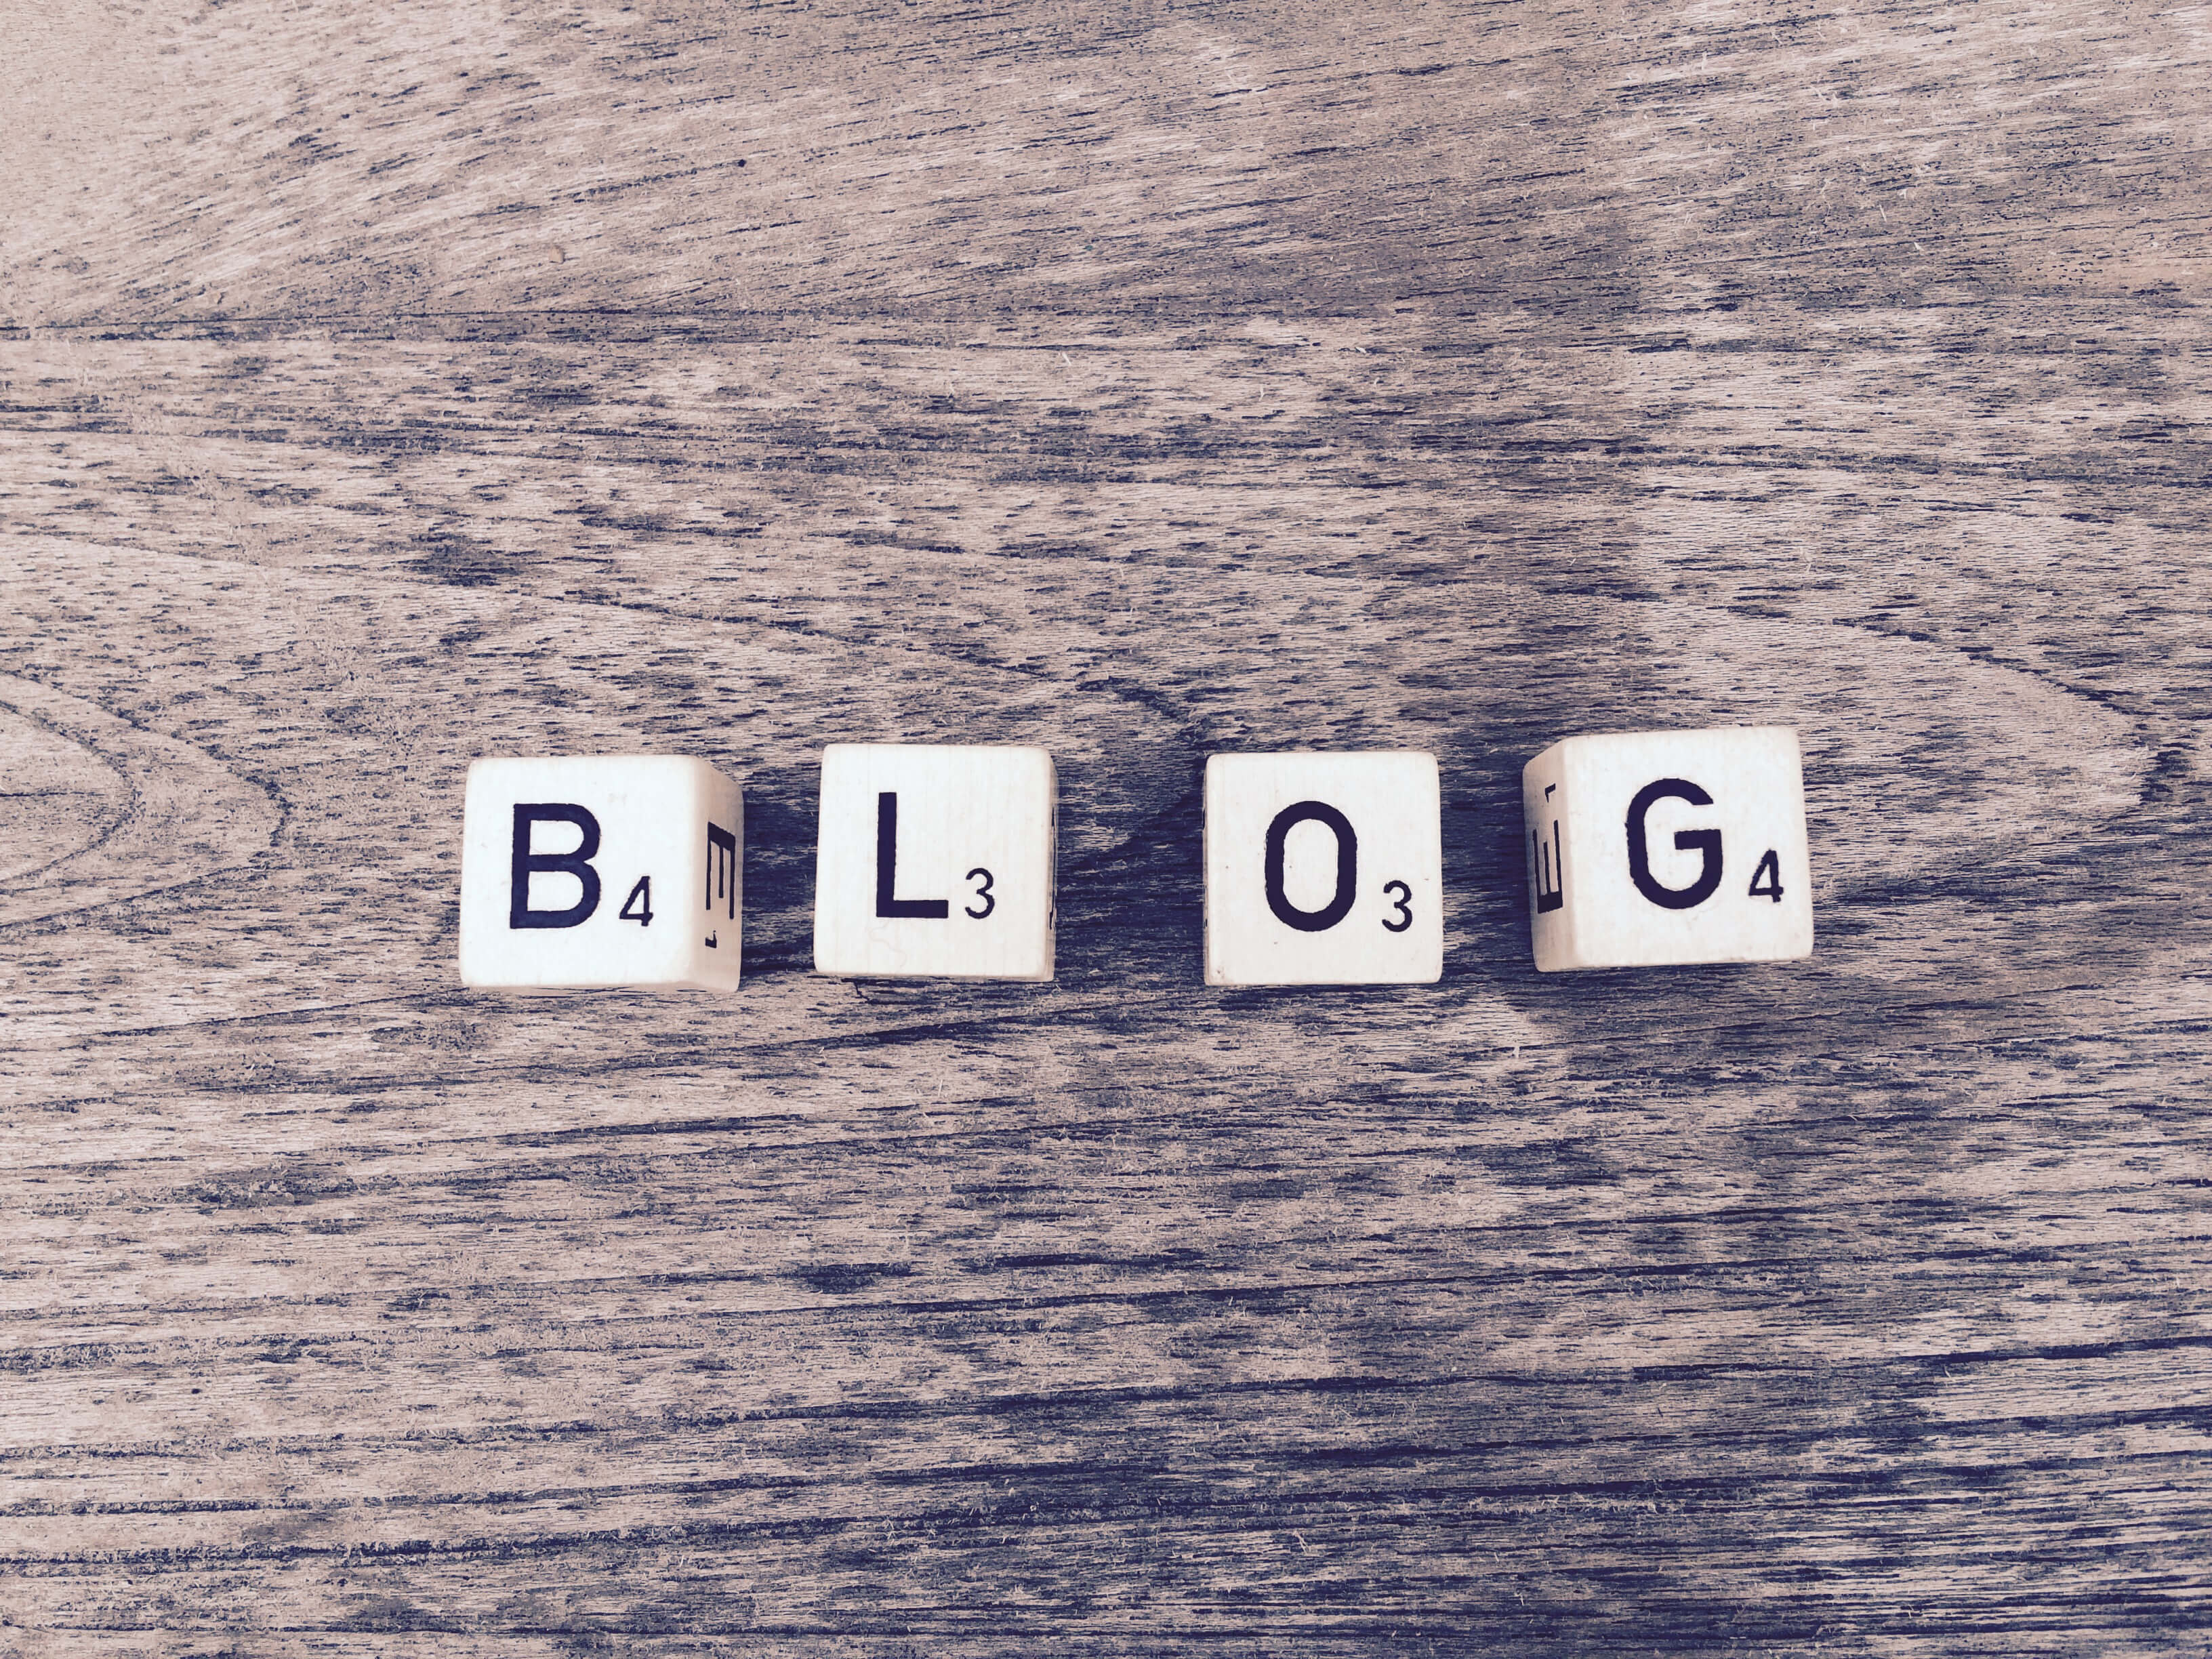 Blog = Web + Log